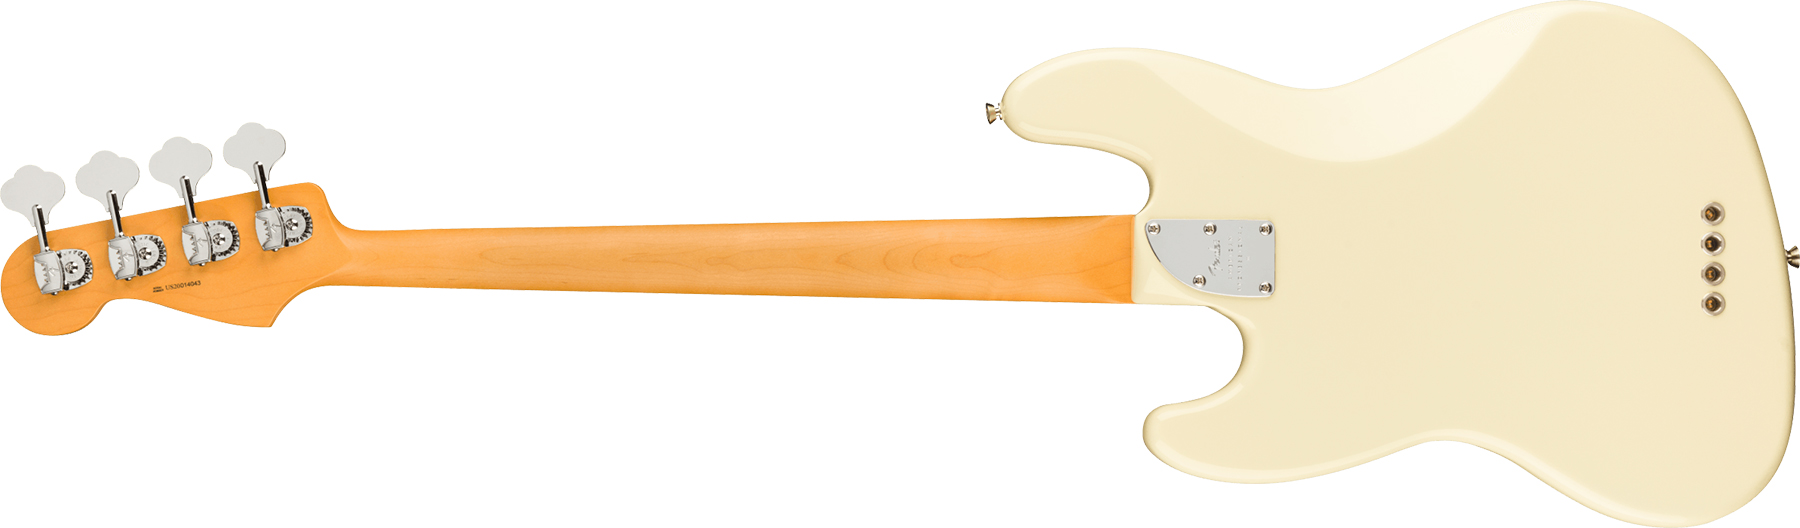 Fender Jazz Bass American Professional Ii Usa Rw - Olympic White - Bajo eléctrico de cuerpo sólido - Variation 1